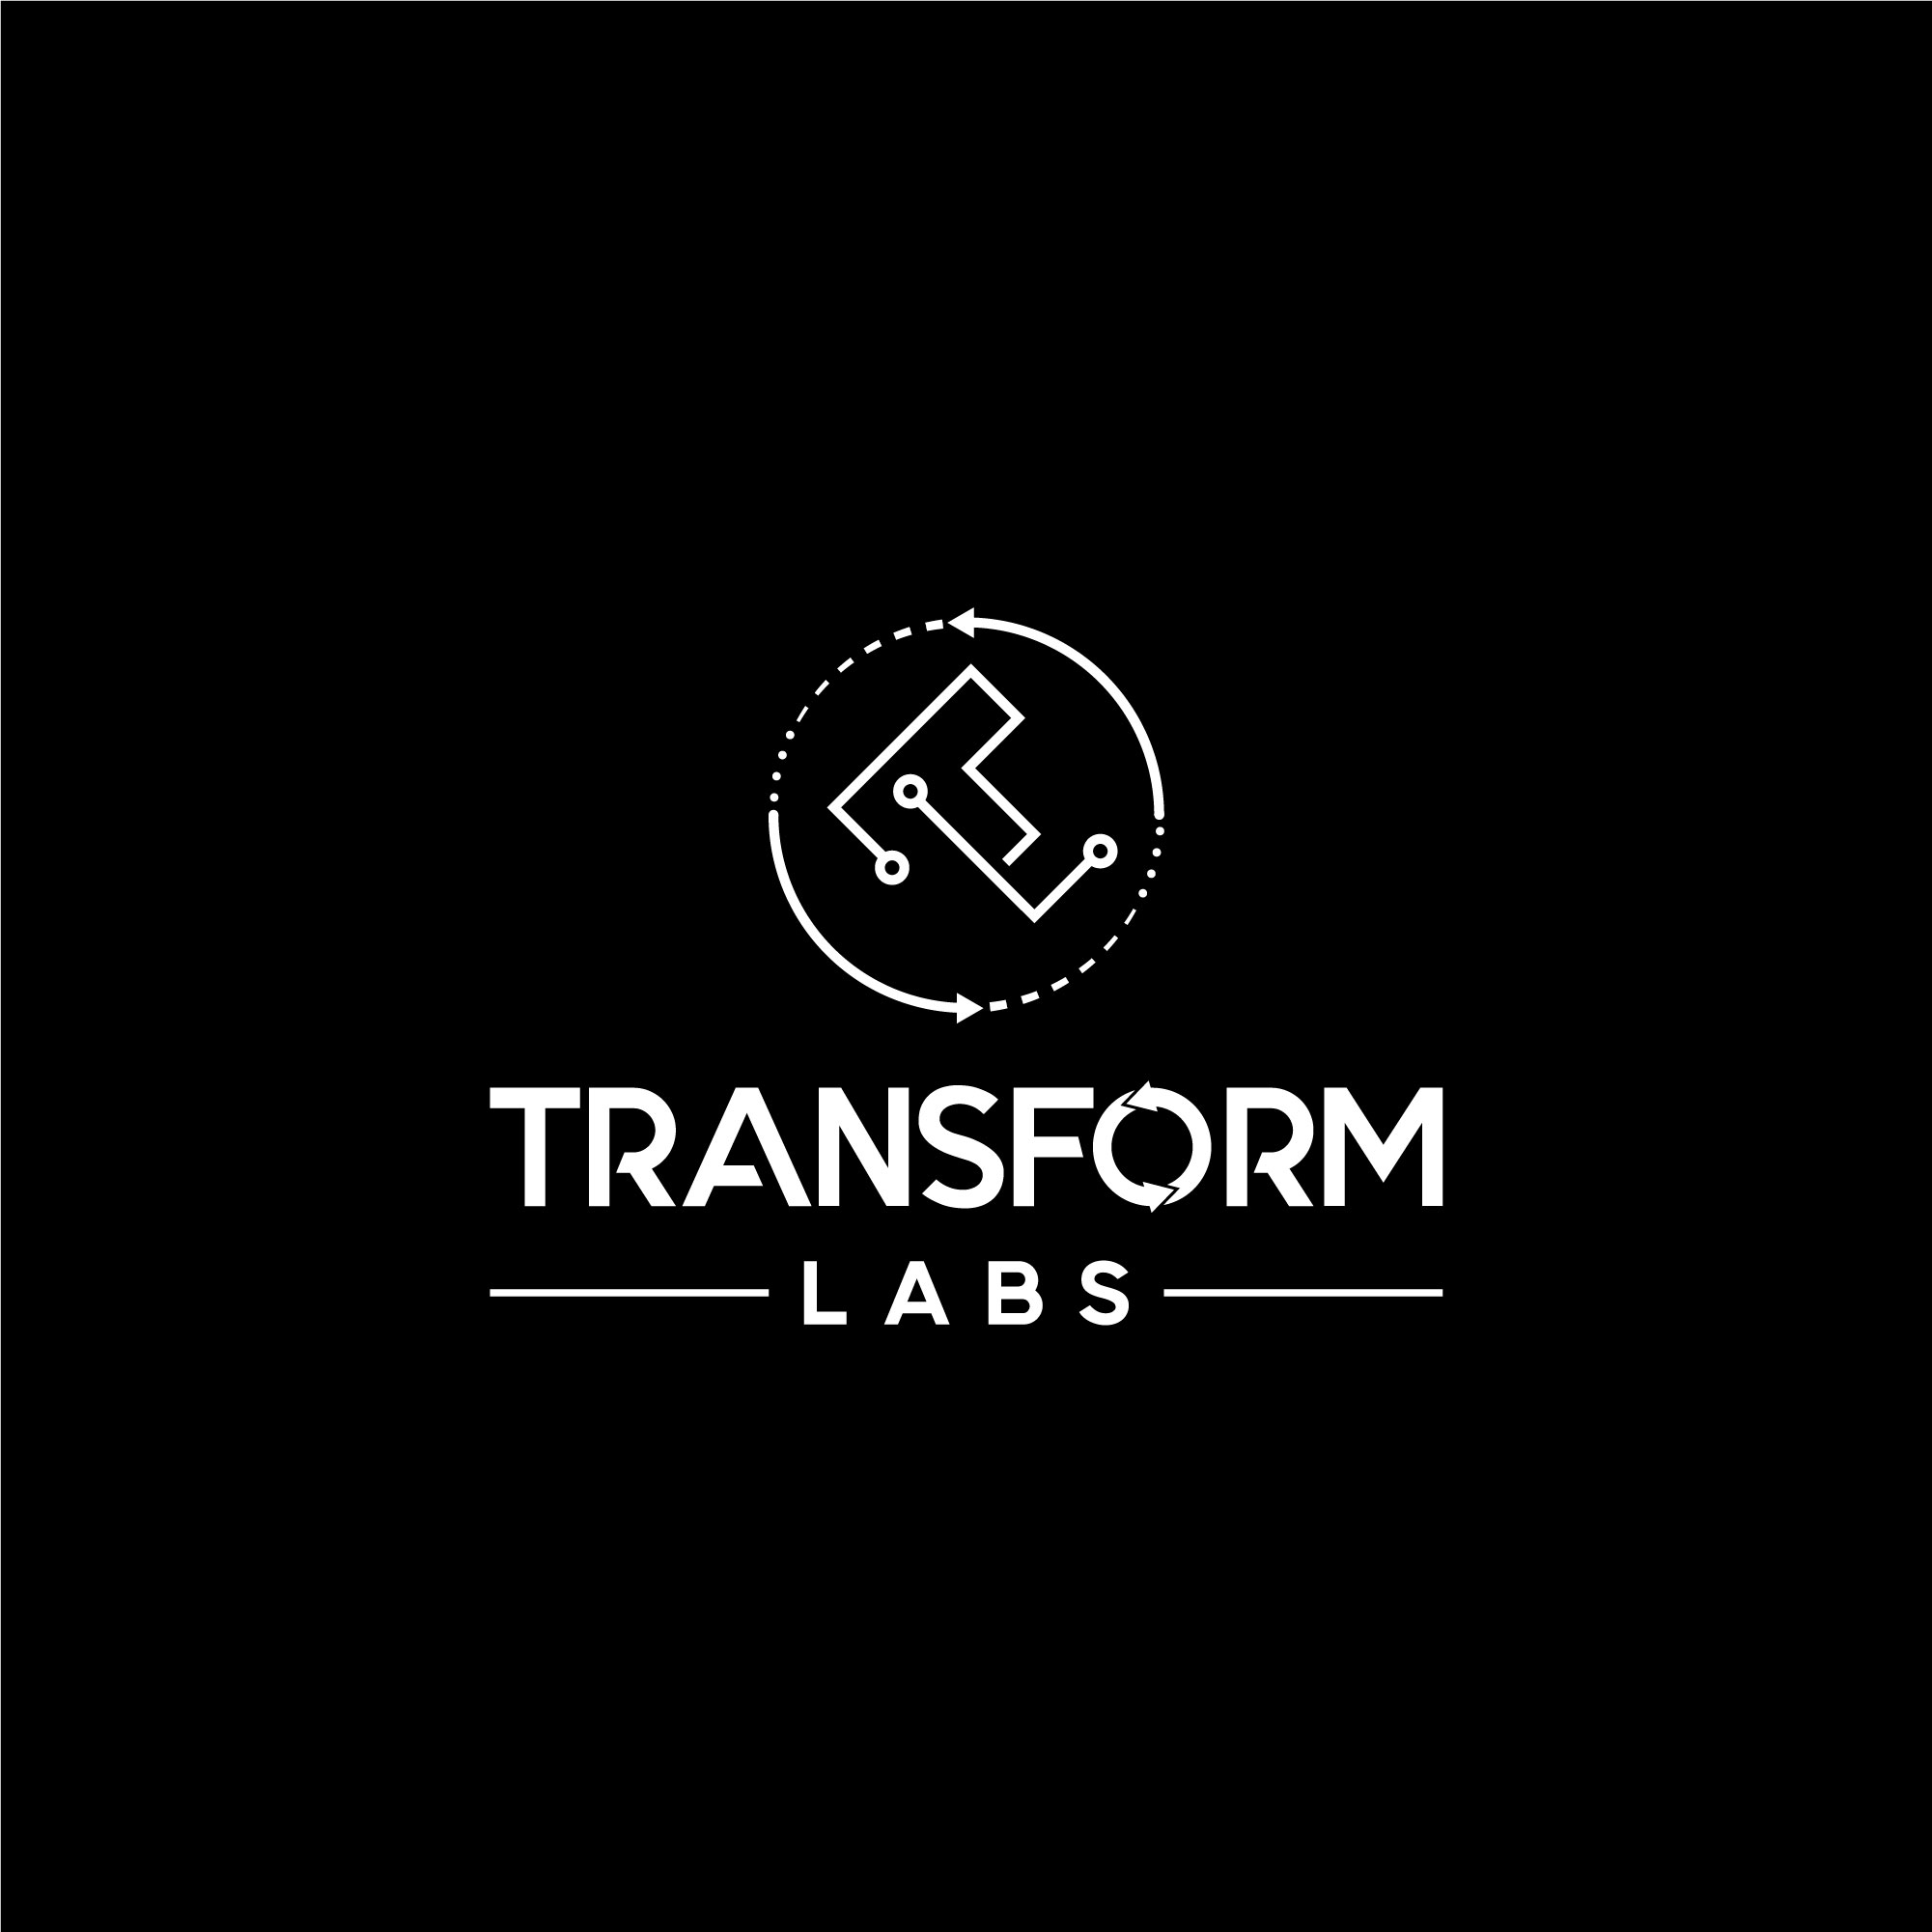 Transform Labs Logo black